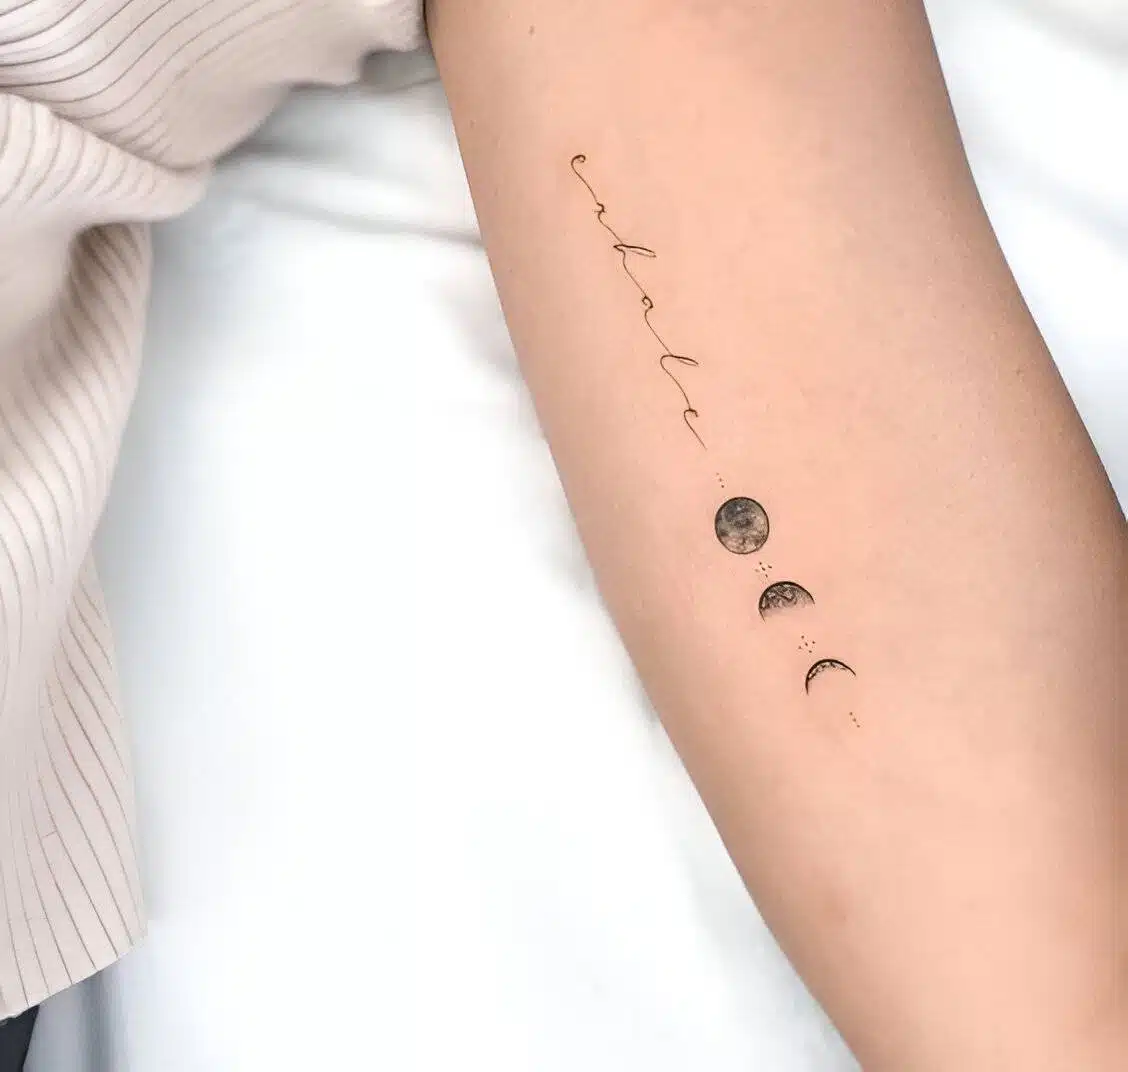 25 Mini Moon Tattoos To Boost Your Feminine Power - 171